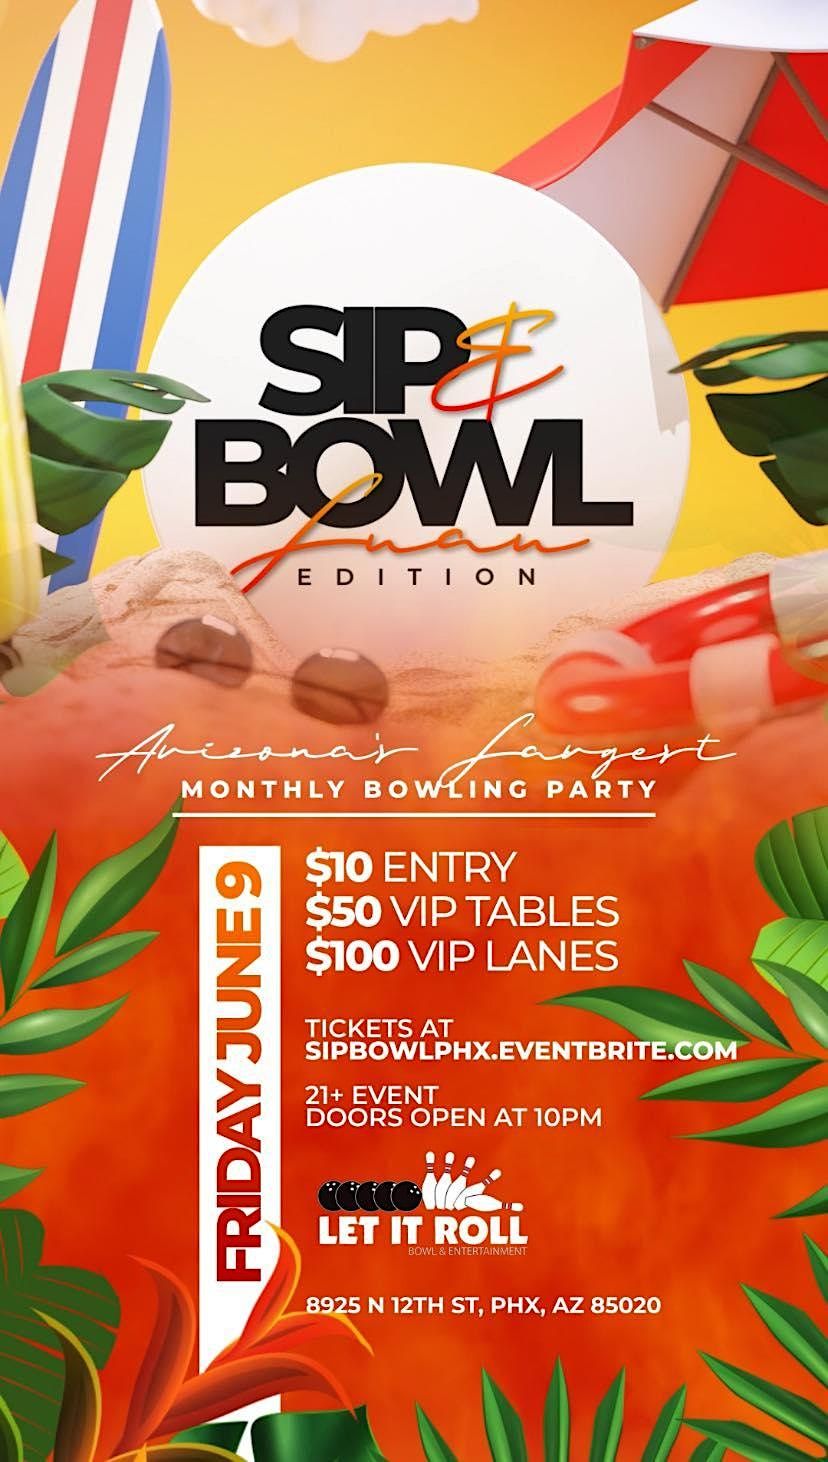 Sip Bowl - LUAU Edition